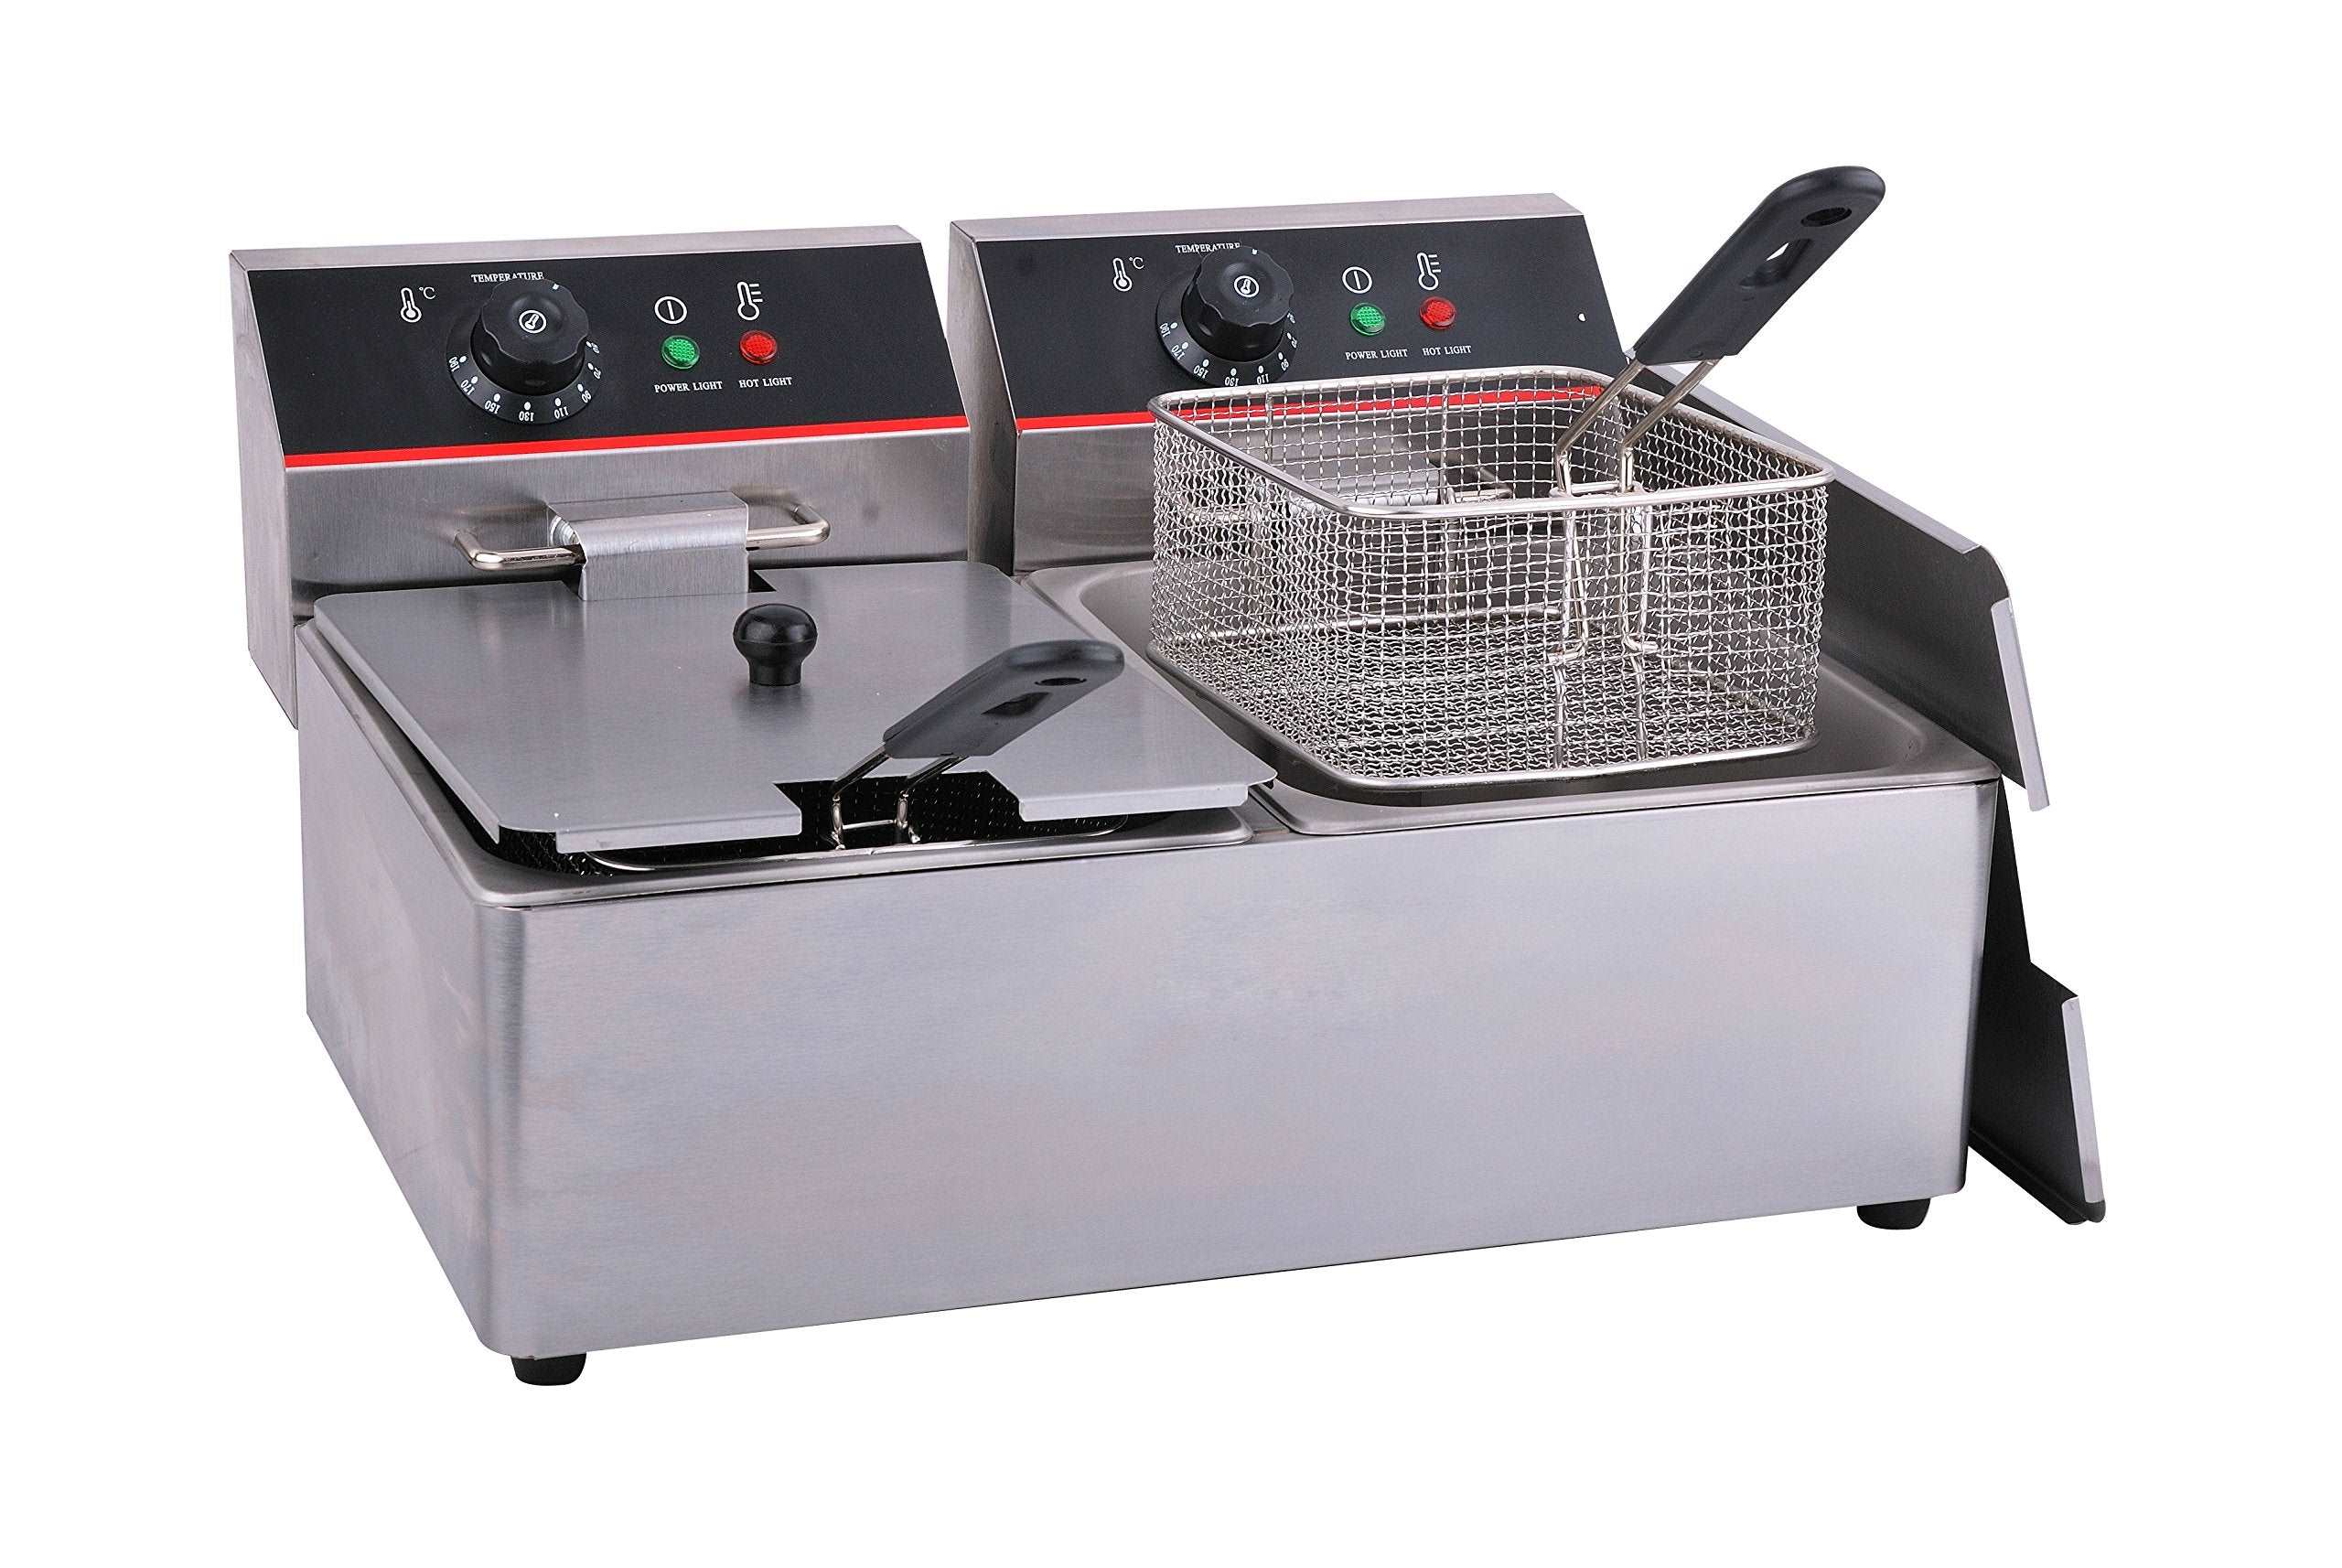 EasyRose Commercial Stainless Steel Deep Fryers Electric Professional Restaurant Grade Turkey Fryers (2x8 Liter)